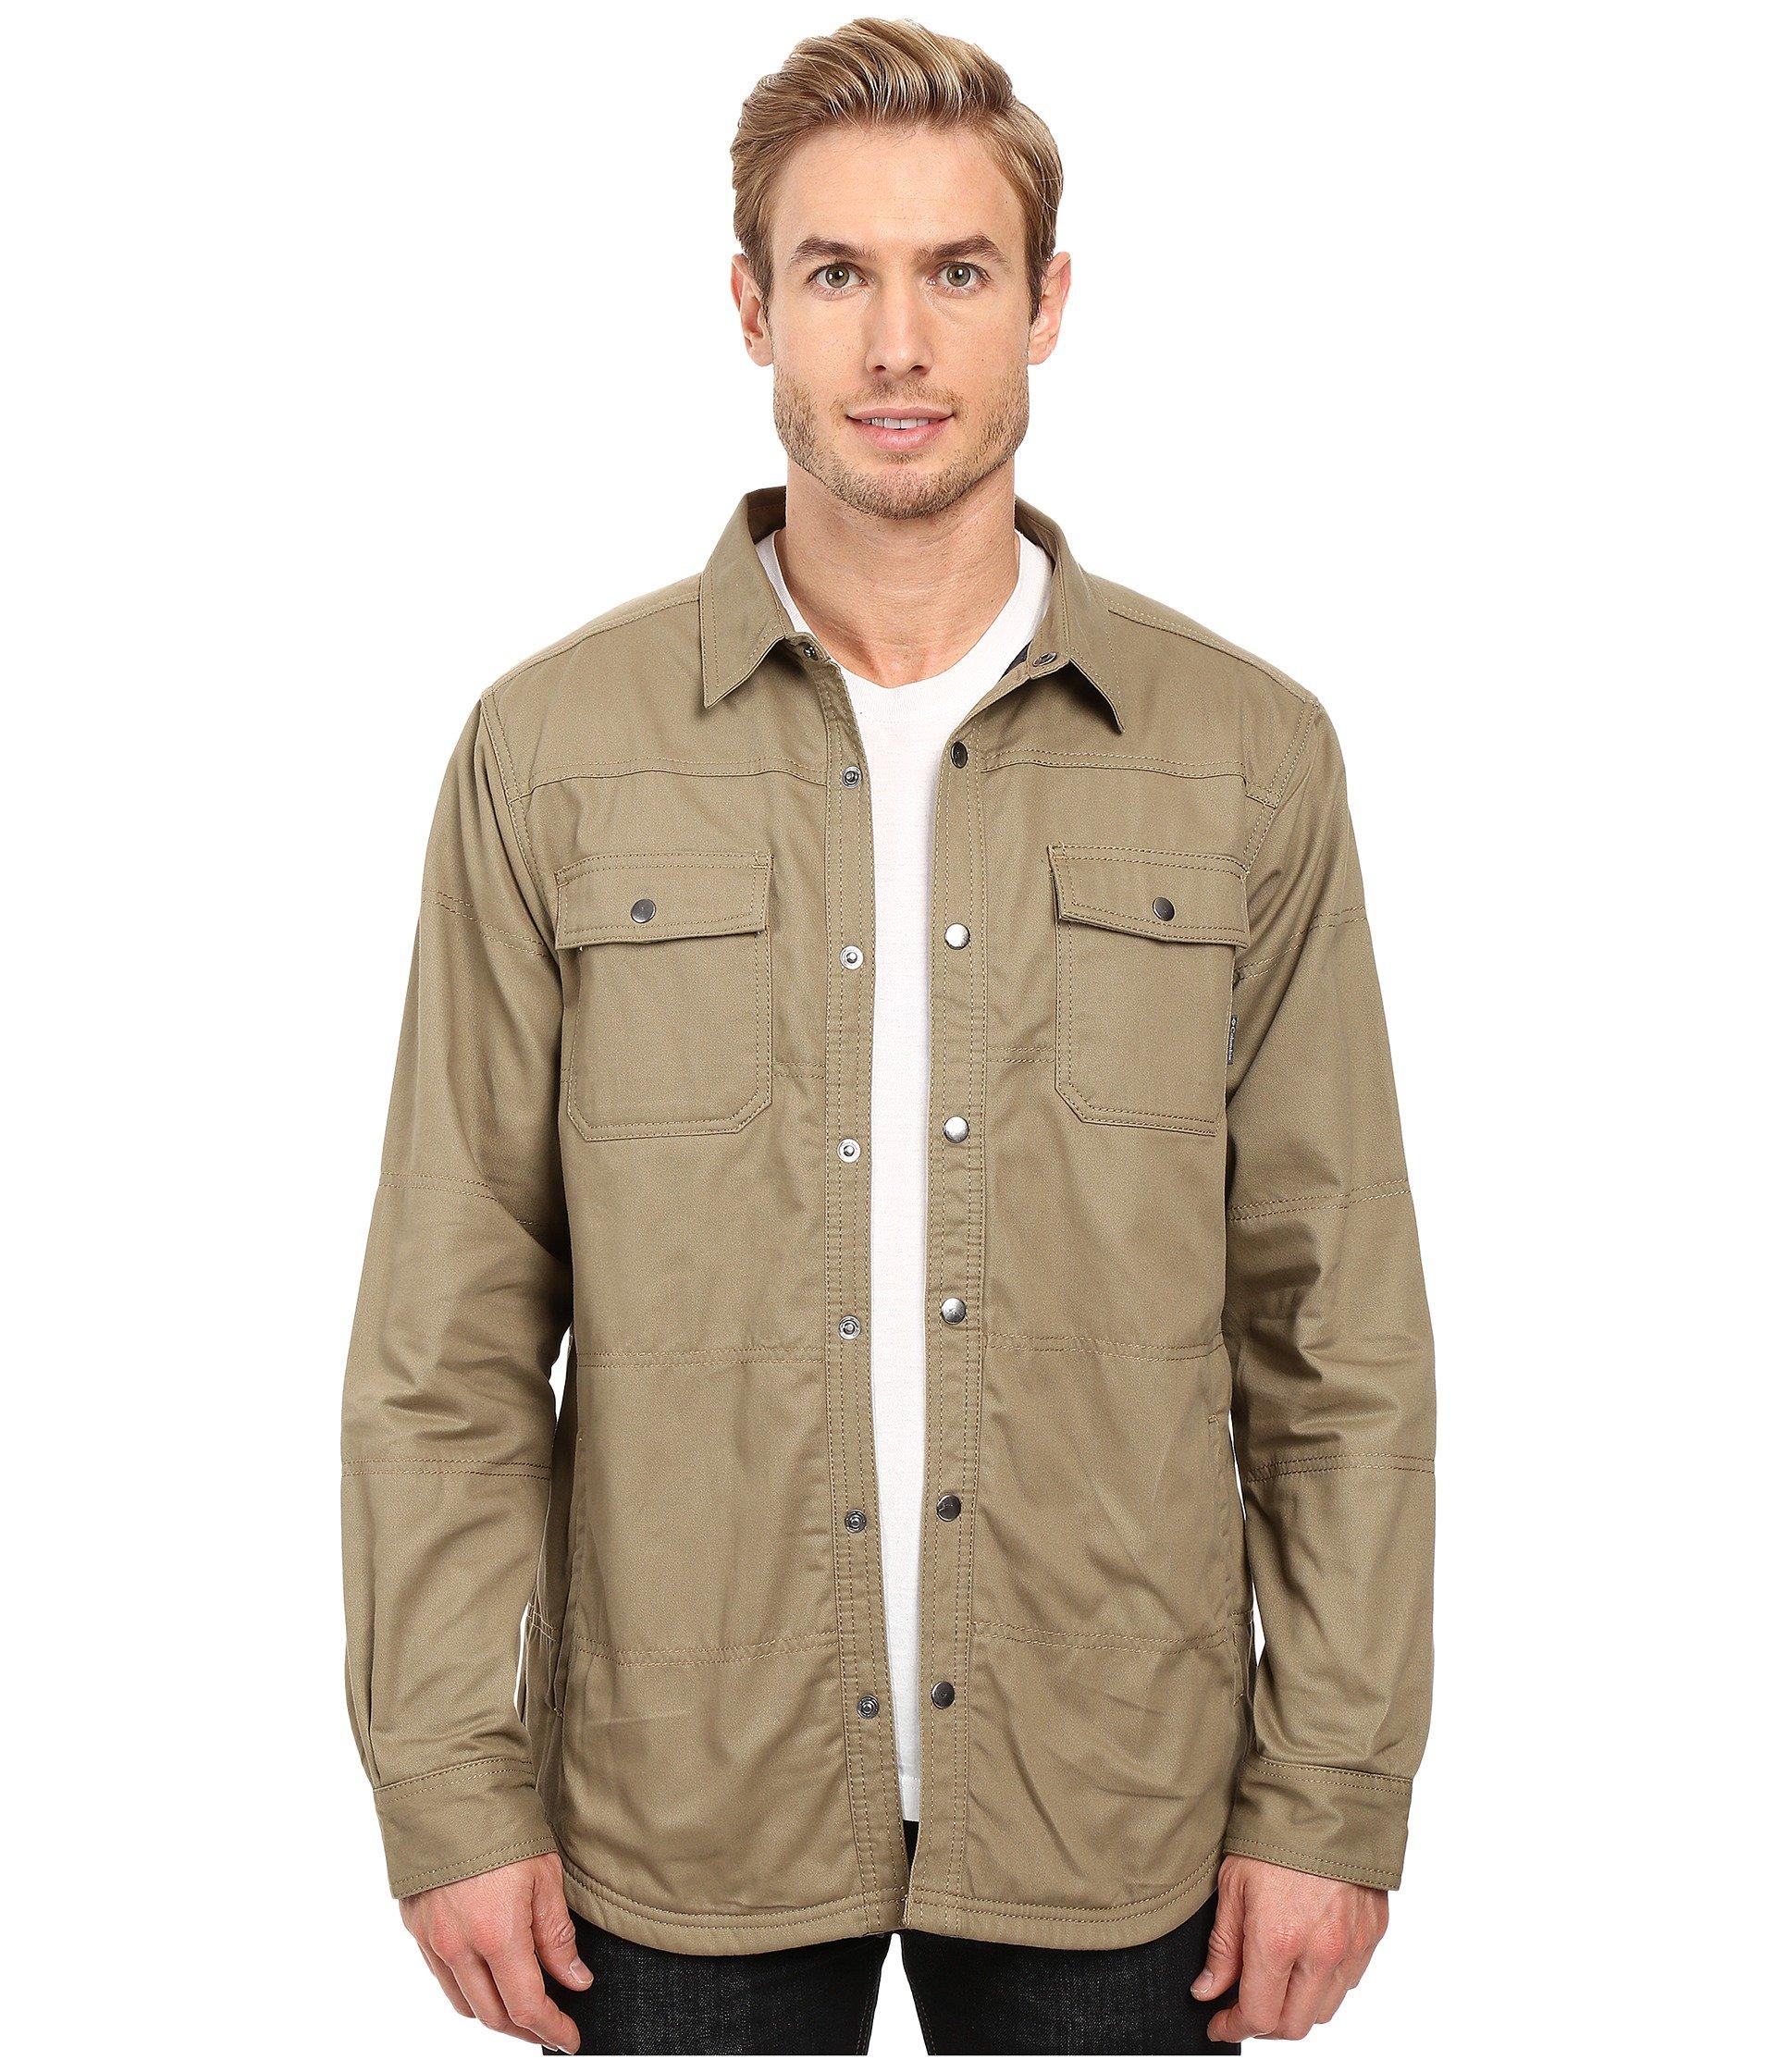 columbia men's log vista shirt jacket